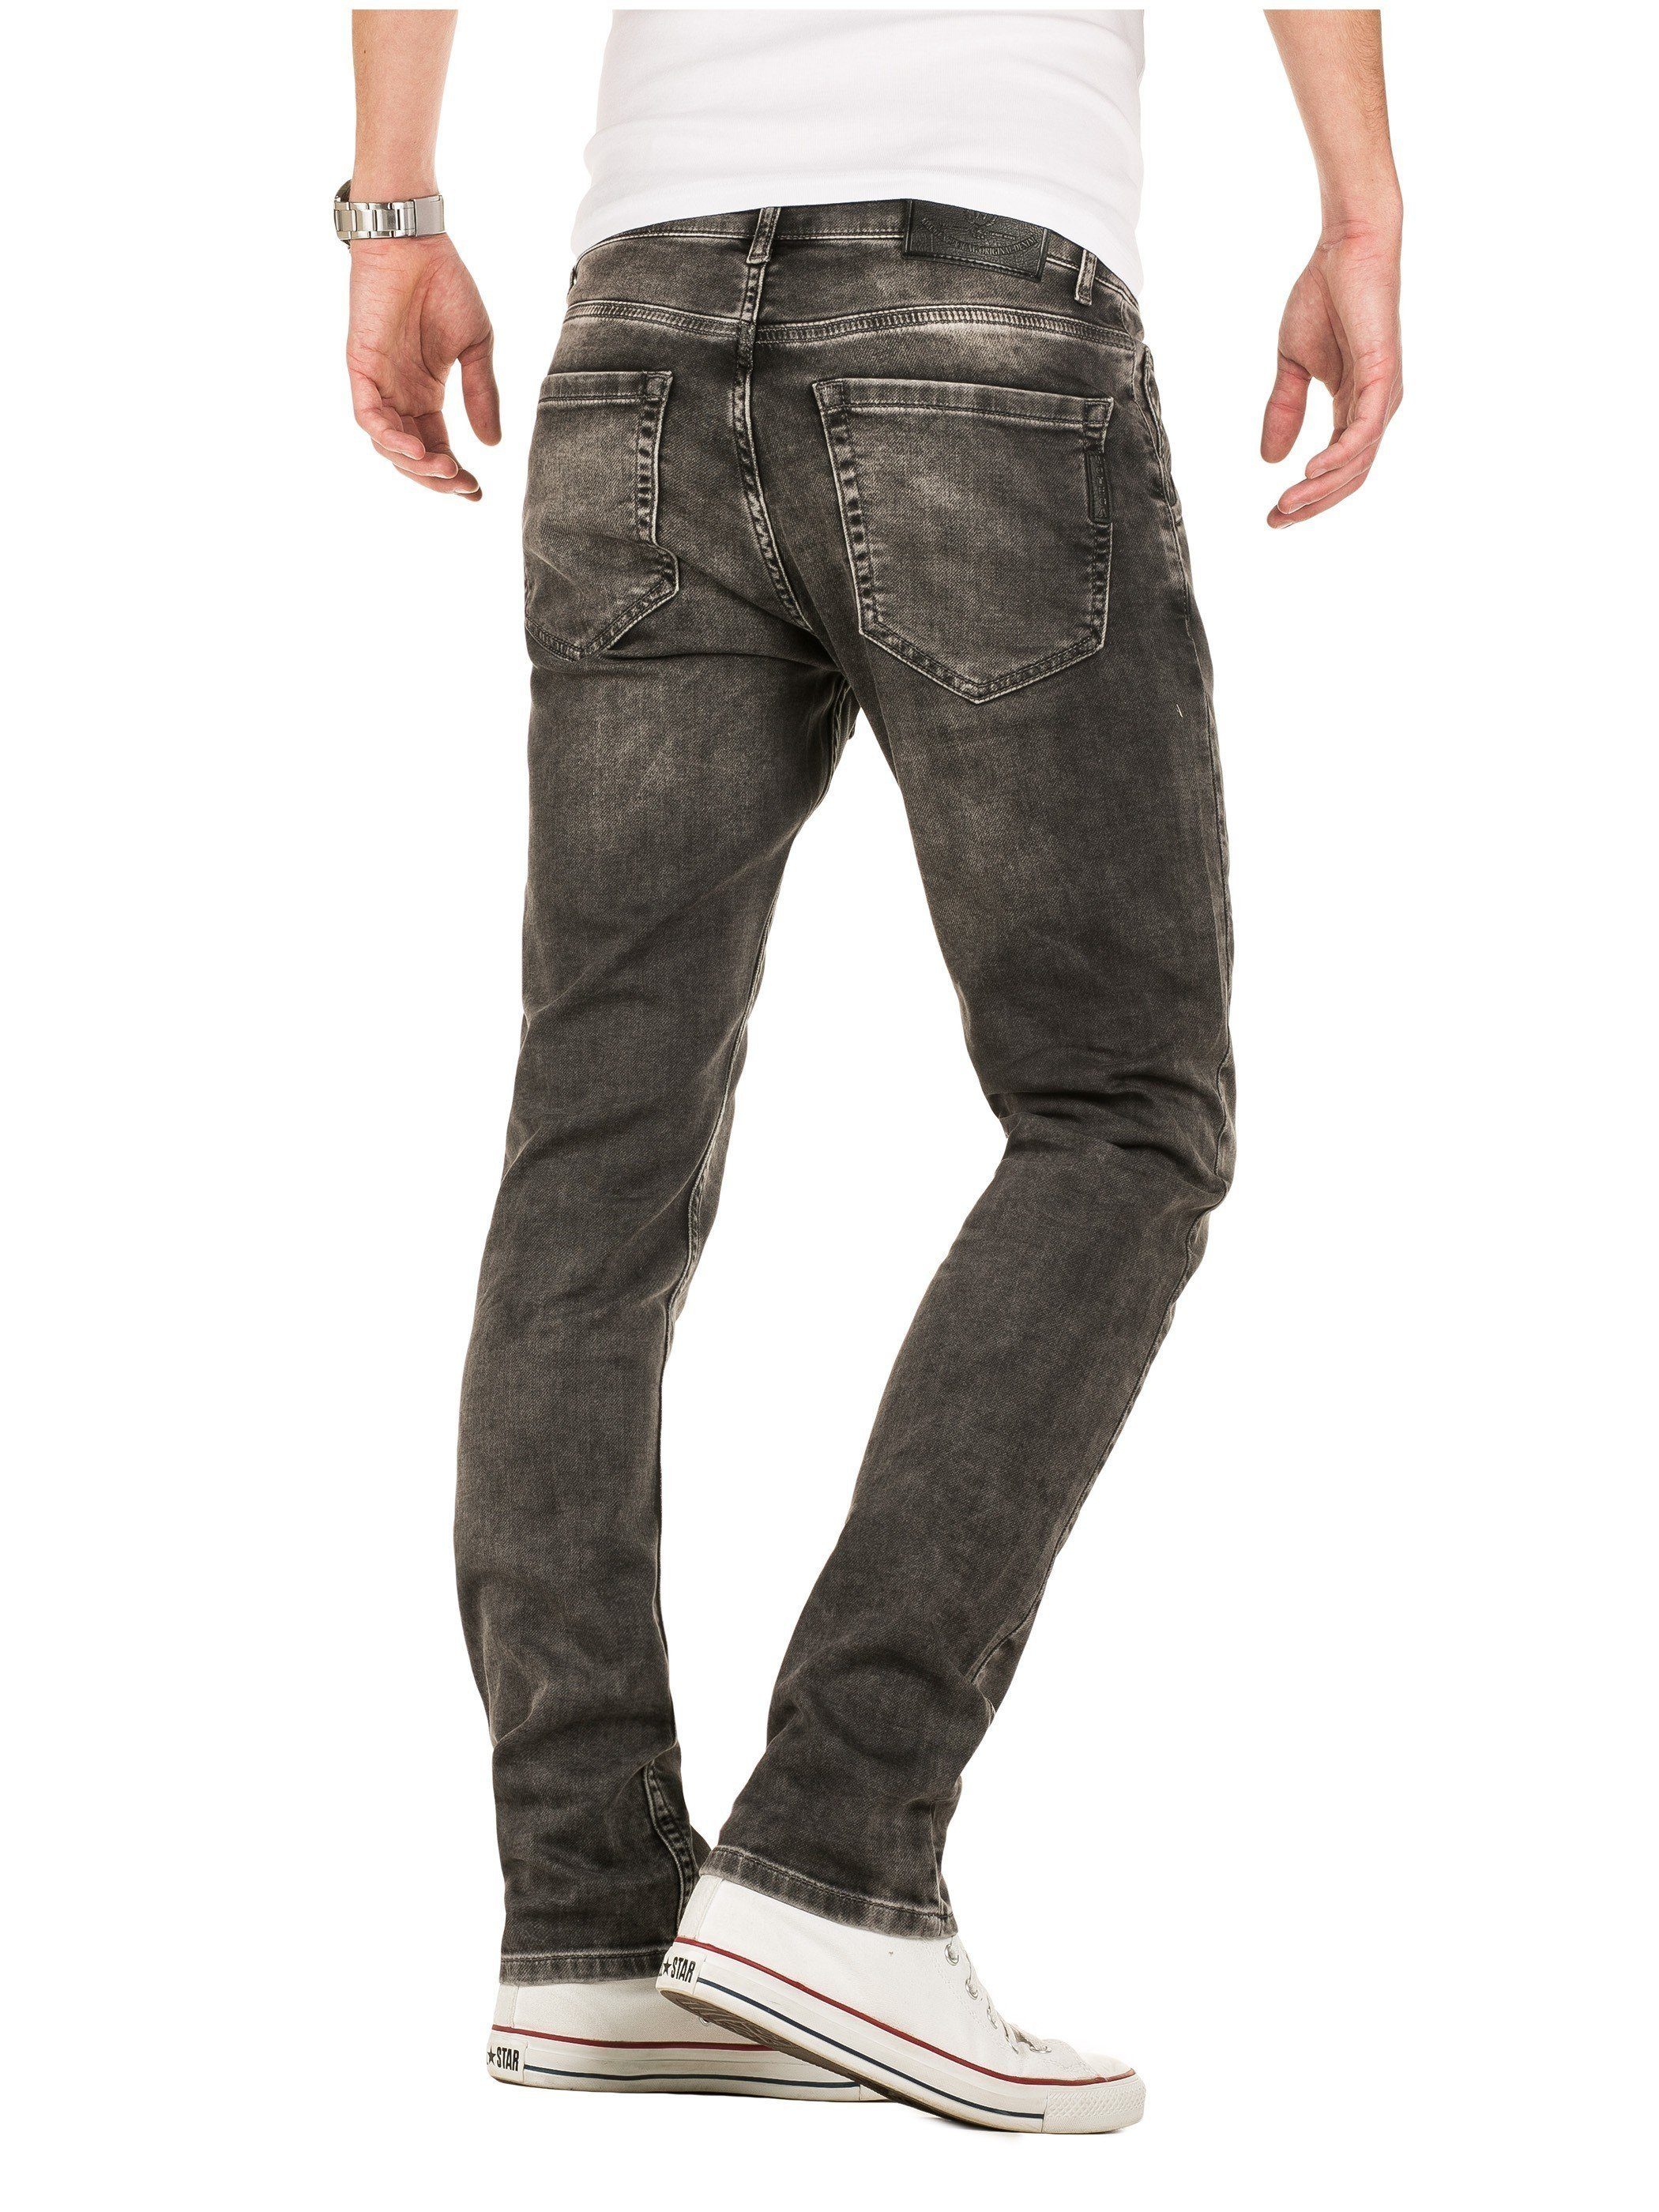 WOTEGA Slim-fit-Jeans grey Grau Hose 19000) Denim Jeans-Look in Joshua Jogging Herren in Jeans Jogginghose (raven Stretch Sweathosen